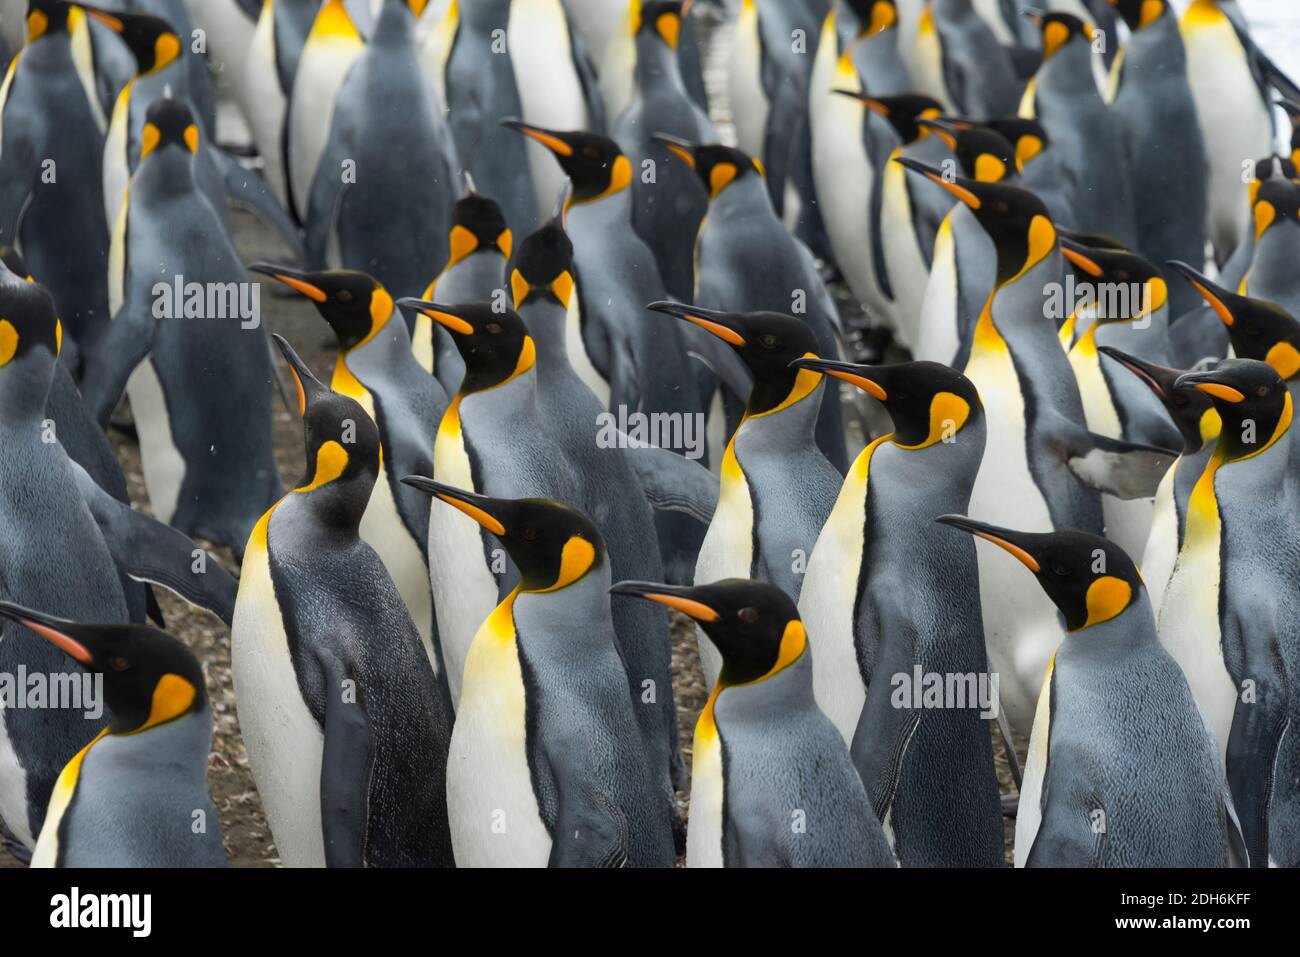 King penguins on the beach, St. Andrews Bay, South Georgia, Antarctica Stock Photo